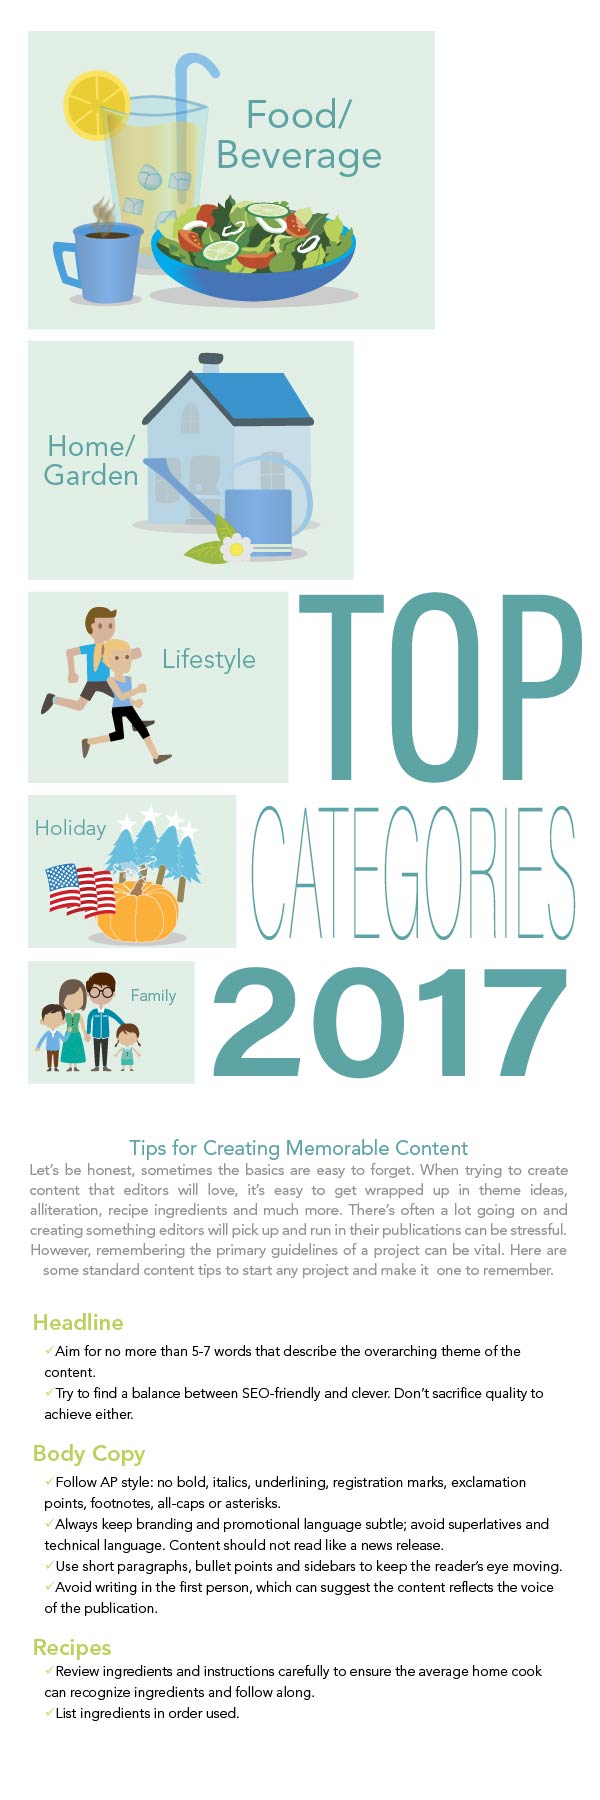 Top Catagories2017